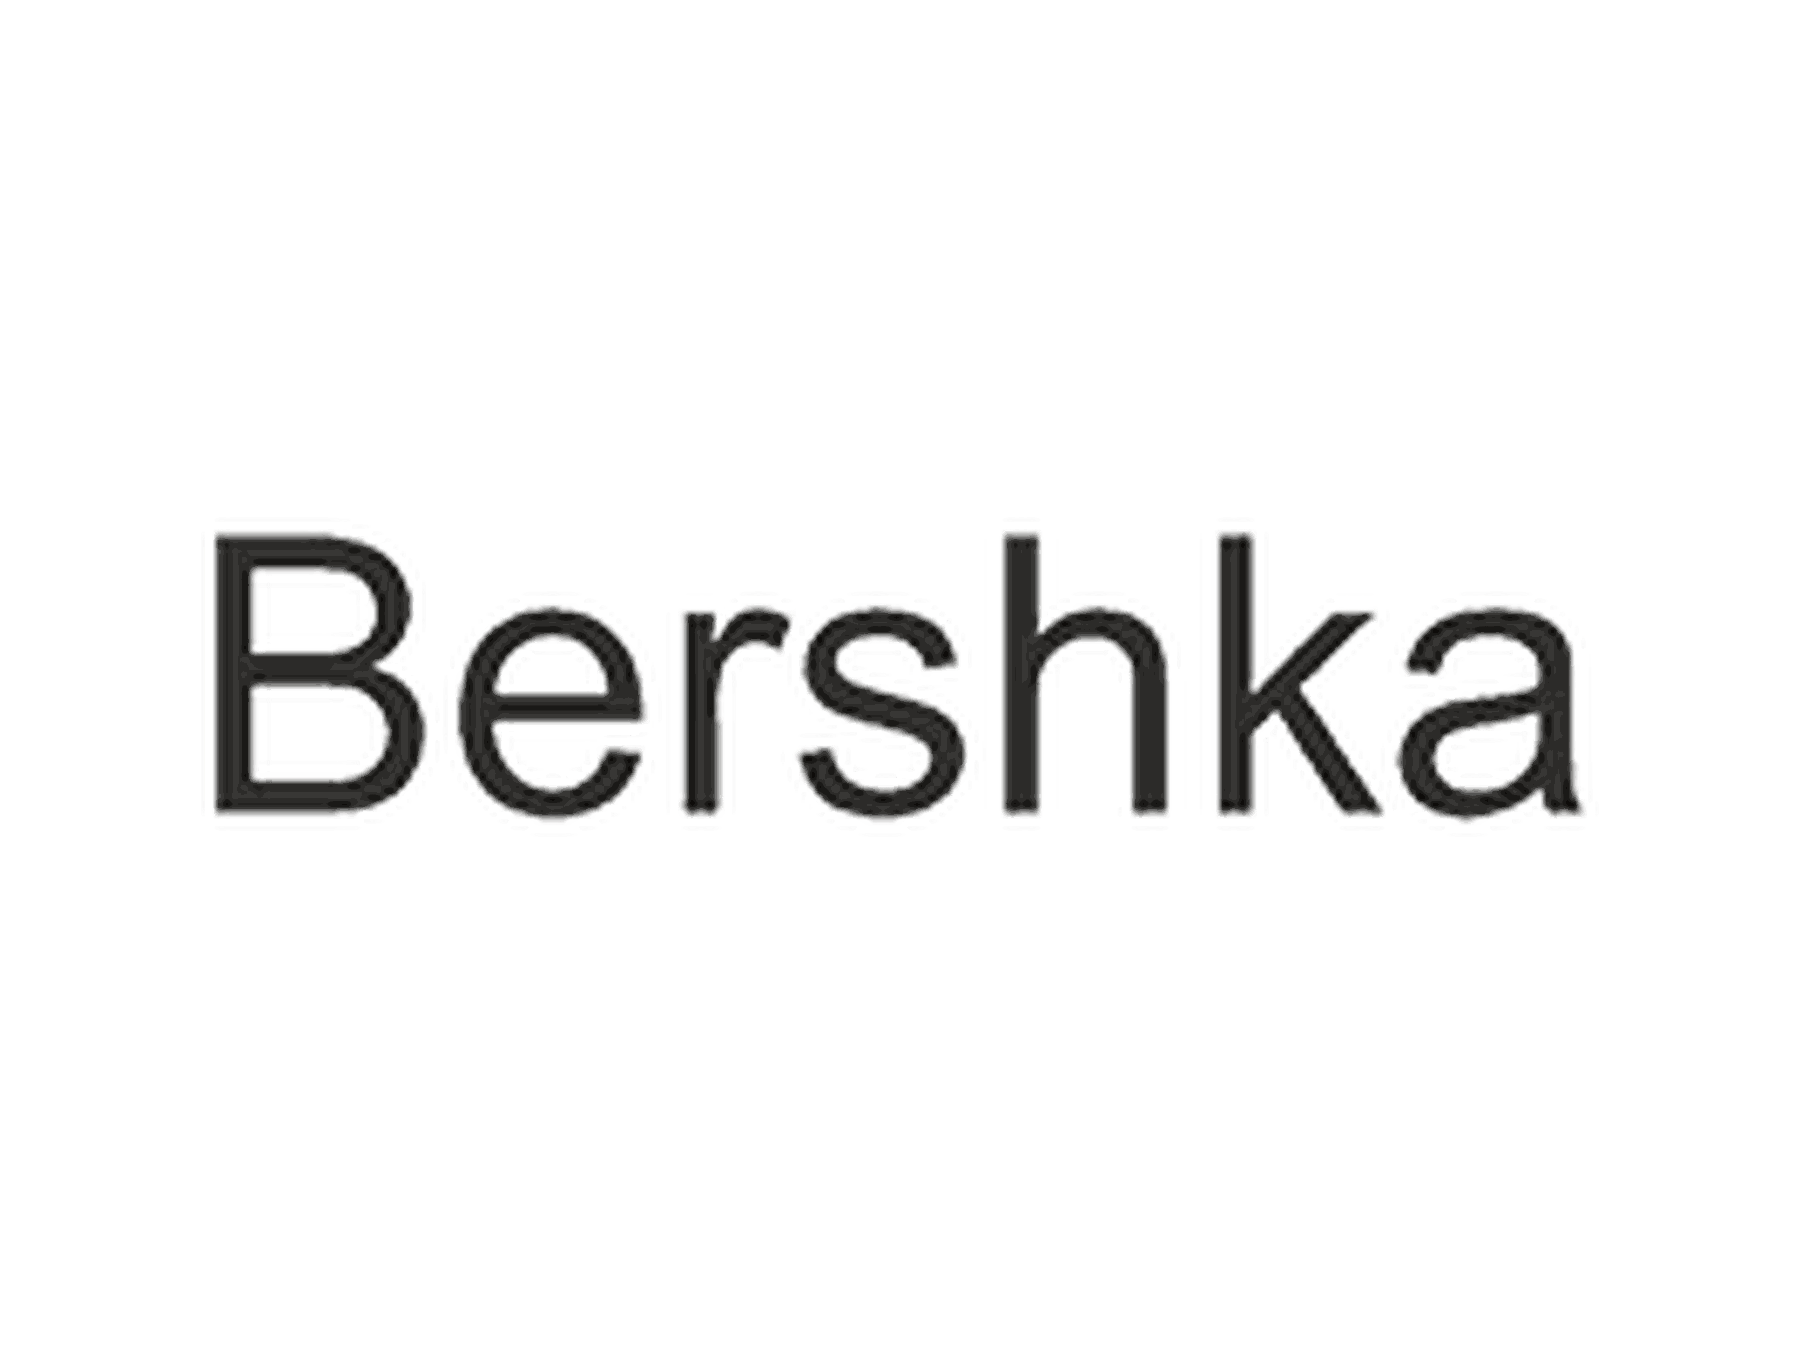 Código promocional Bershka